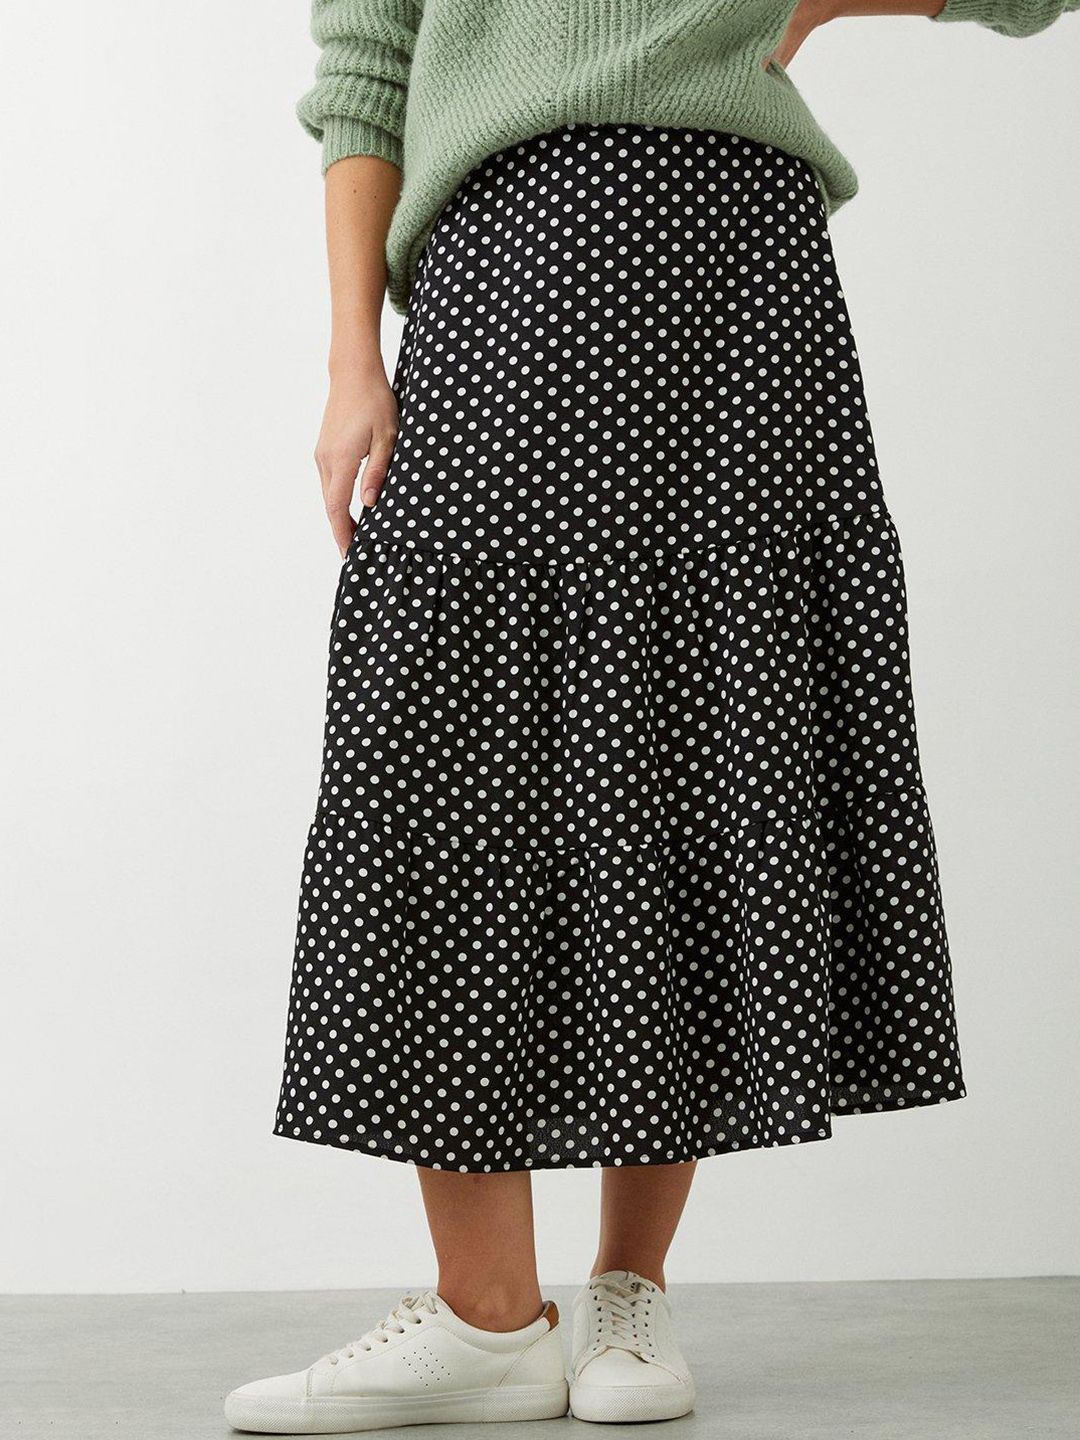 DOROTHY PERKINS Polka Dots Print Tiered Midi Skirt Price in India